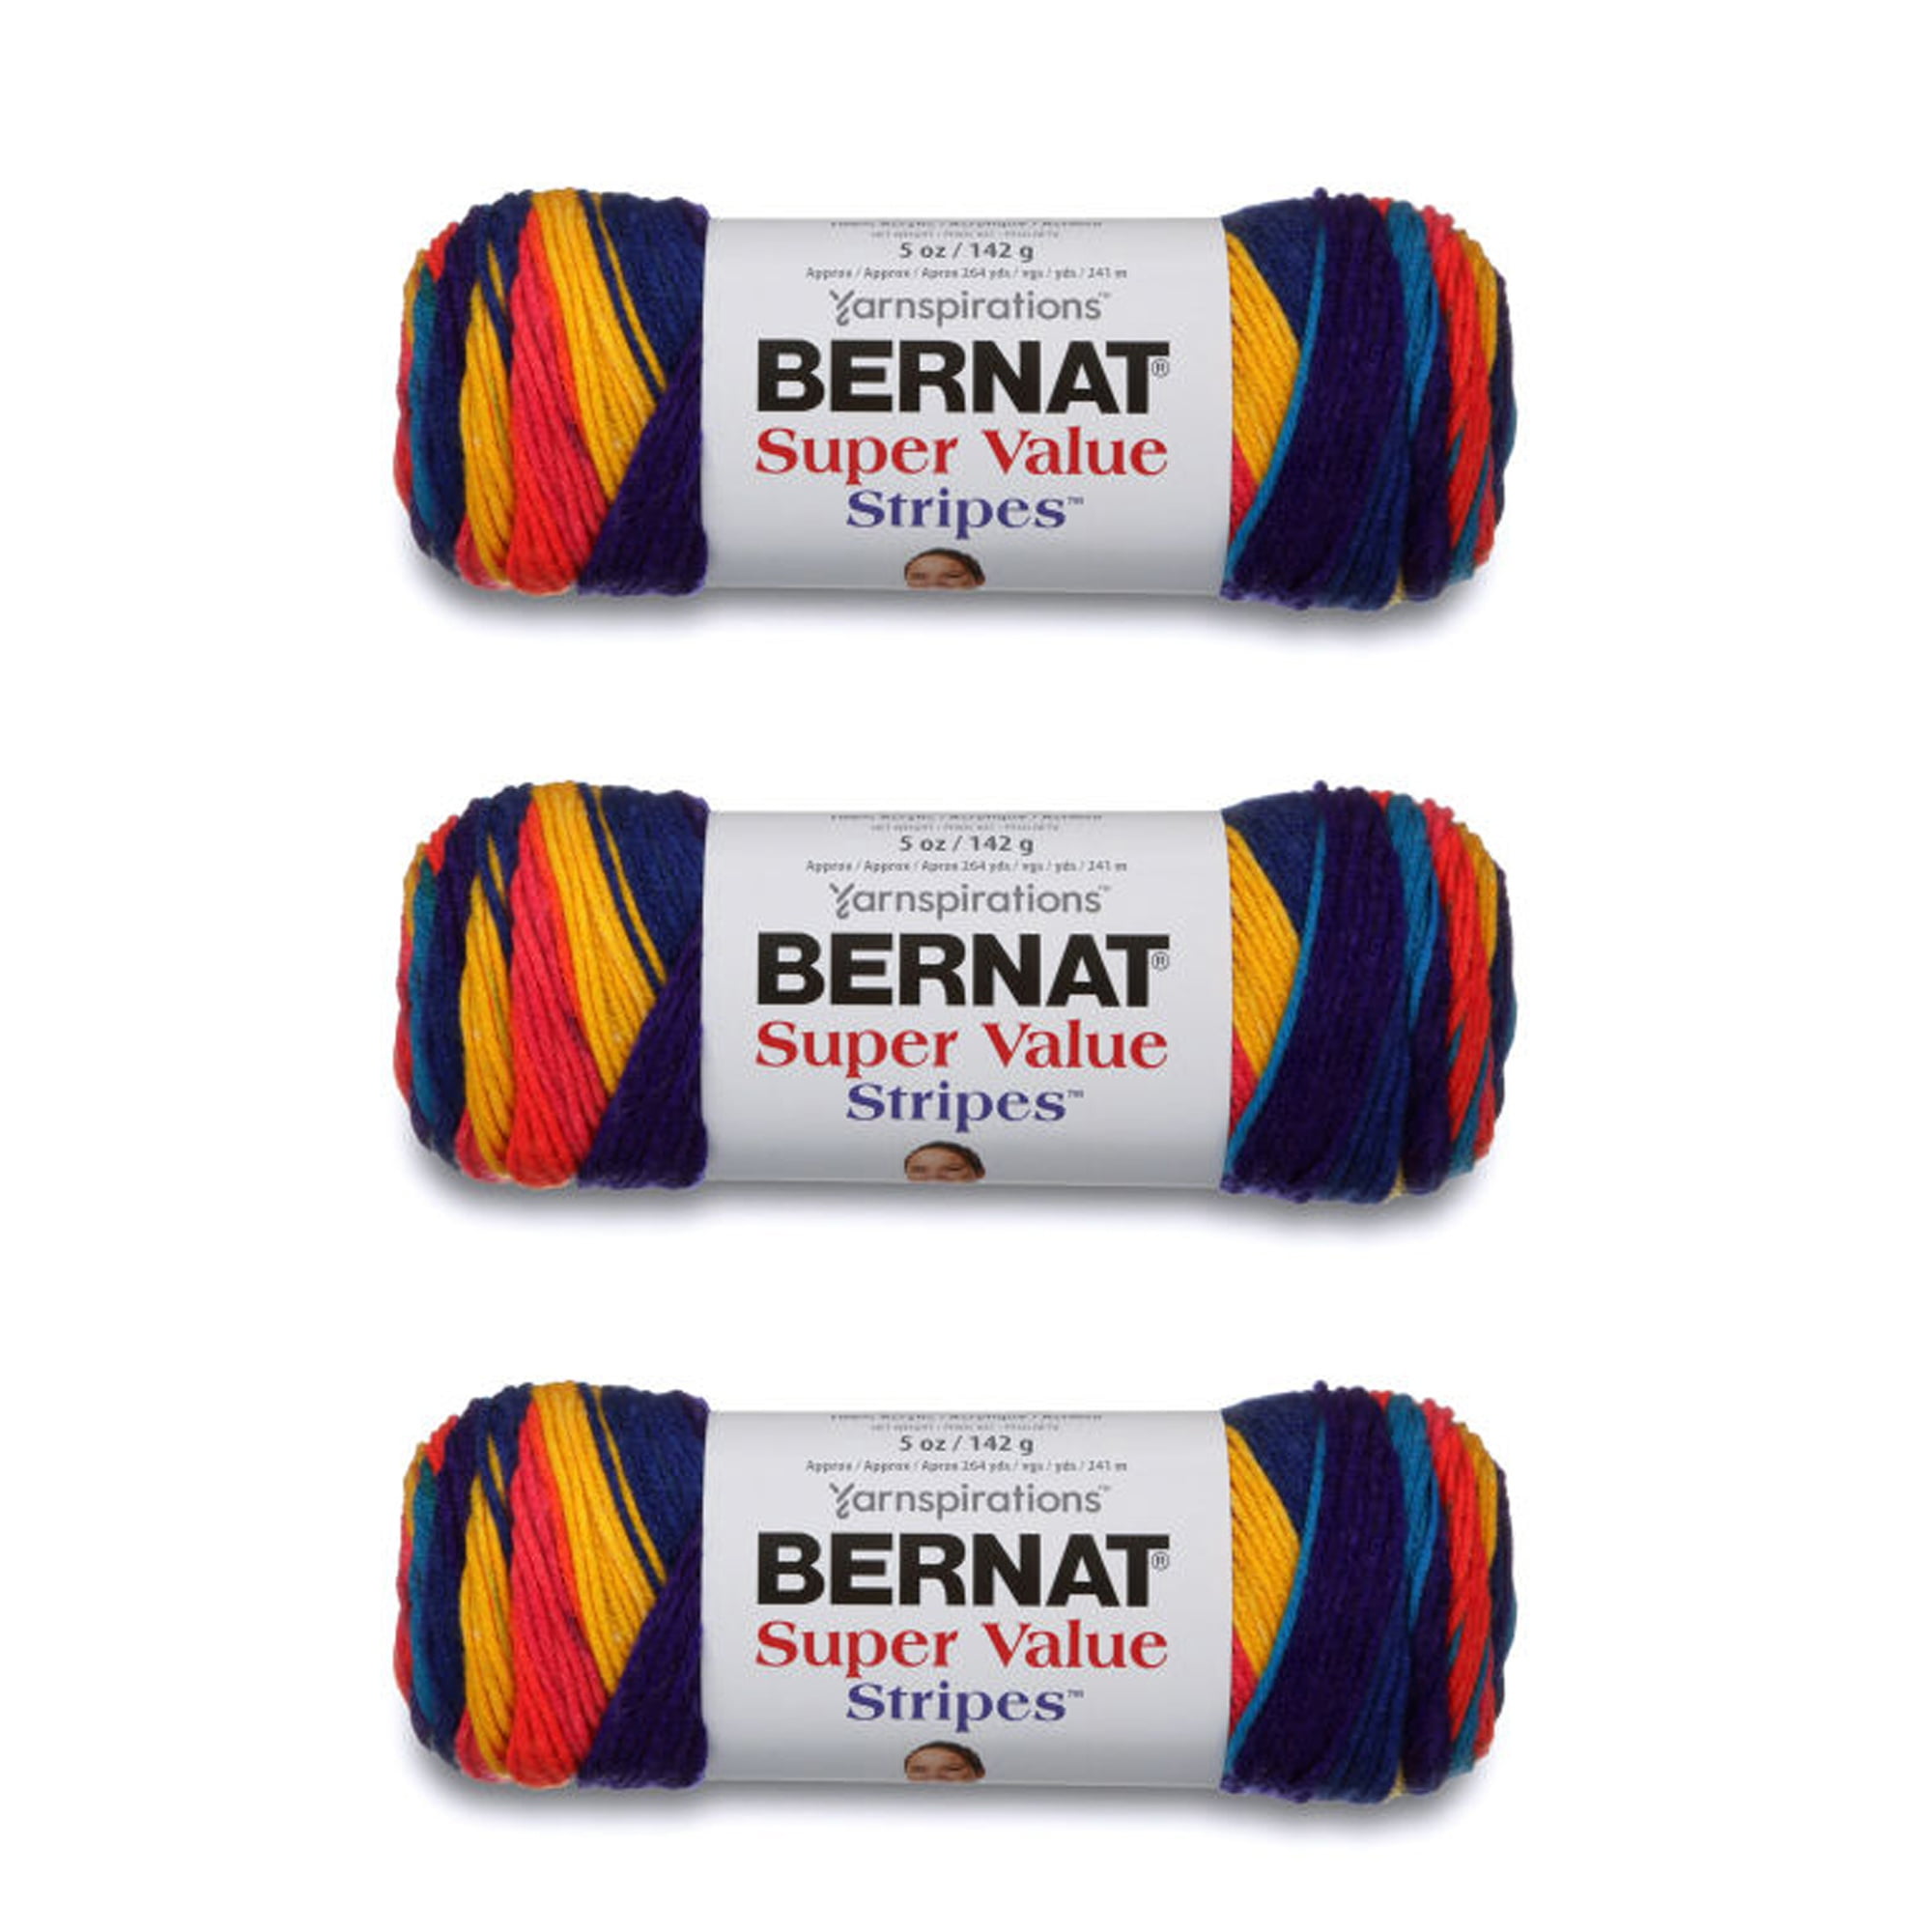 Bernat Super Value Stripes Yarn